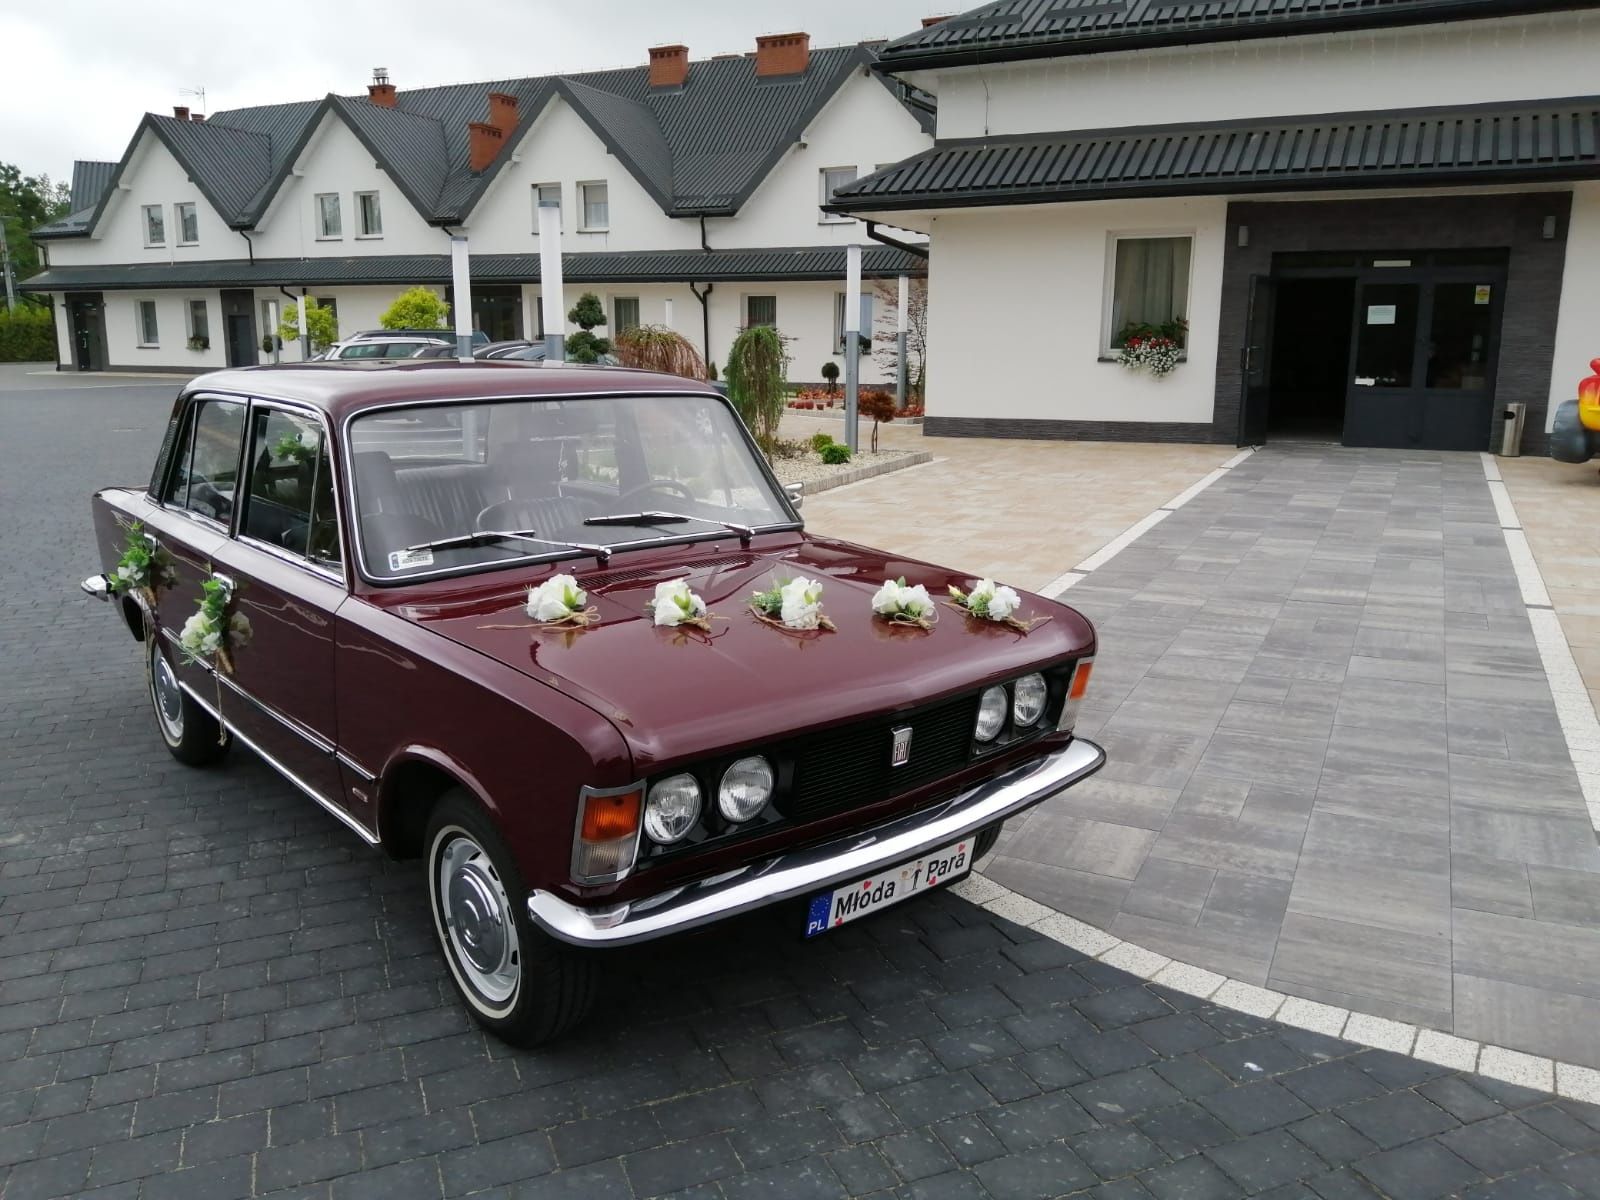 Samochód do ślubu, Fiat 125 p ,kultowy samochód Prl